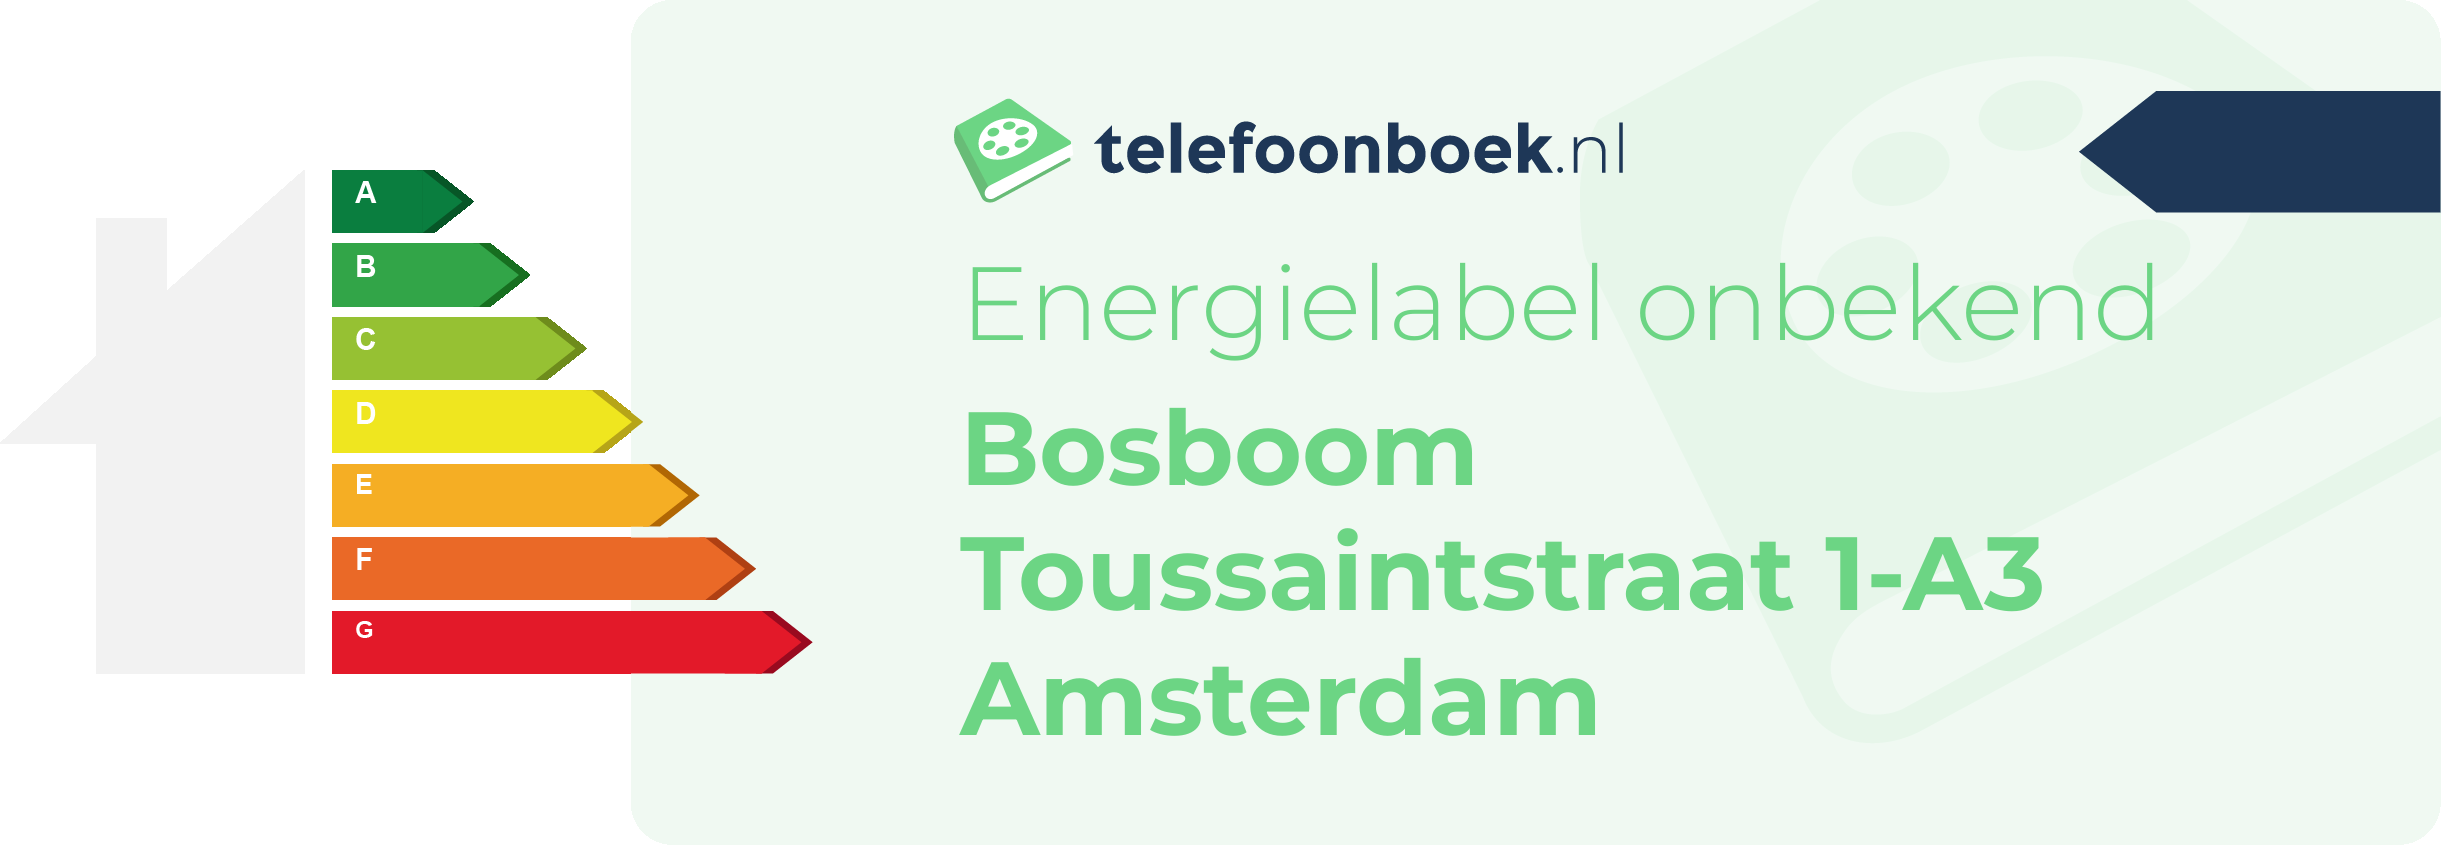 Energielabel Bosboom Toussaintstraat 1-A3 Amsterdam